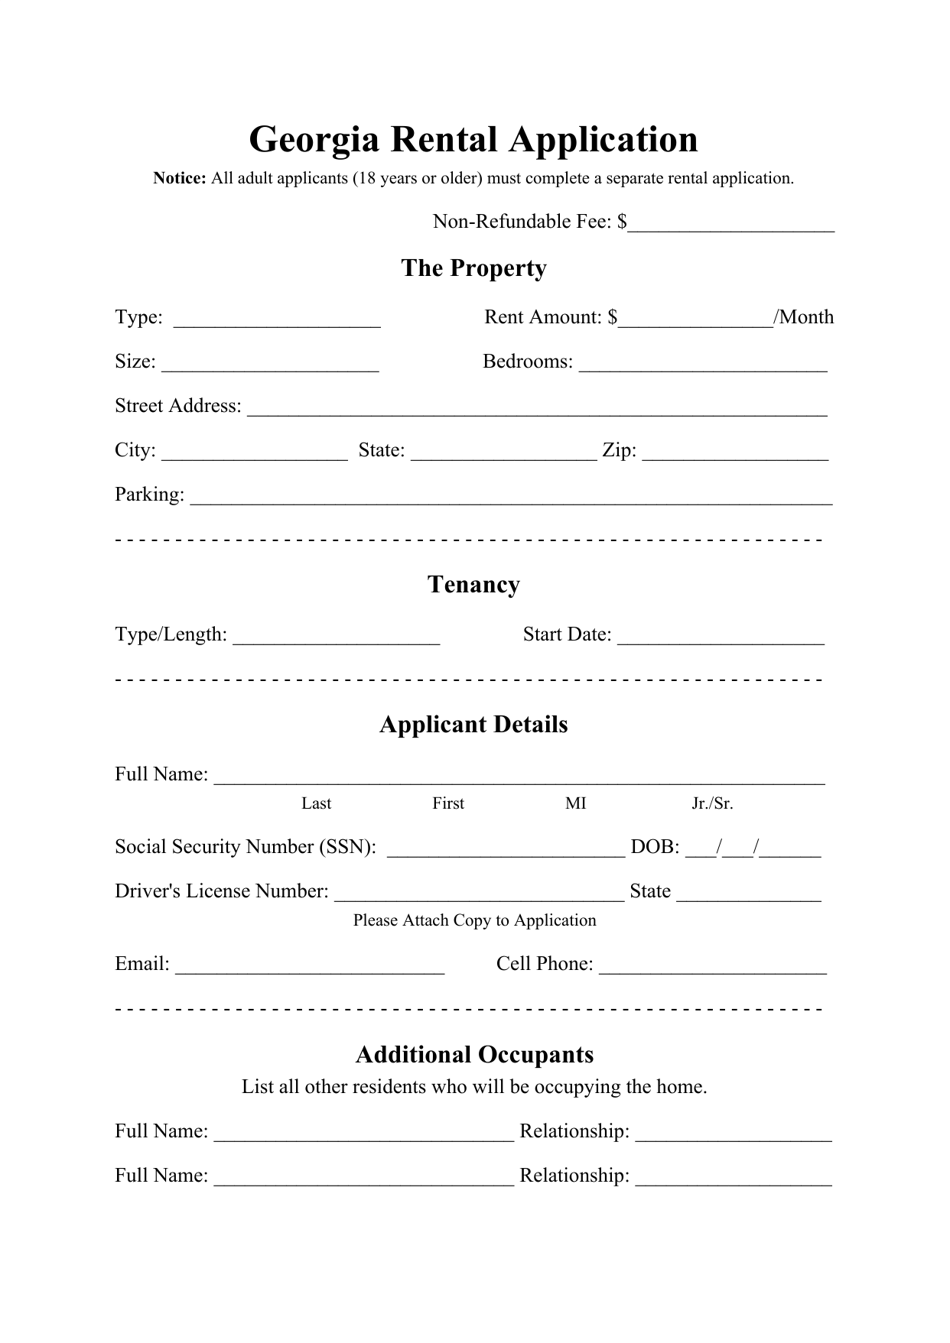 Rental Application Form - Georgia (United States), Page 1